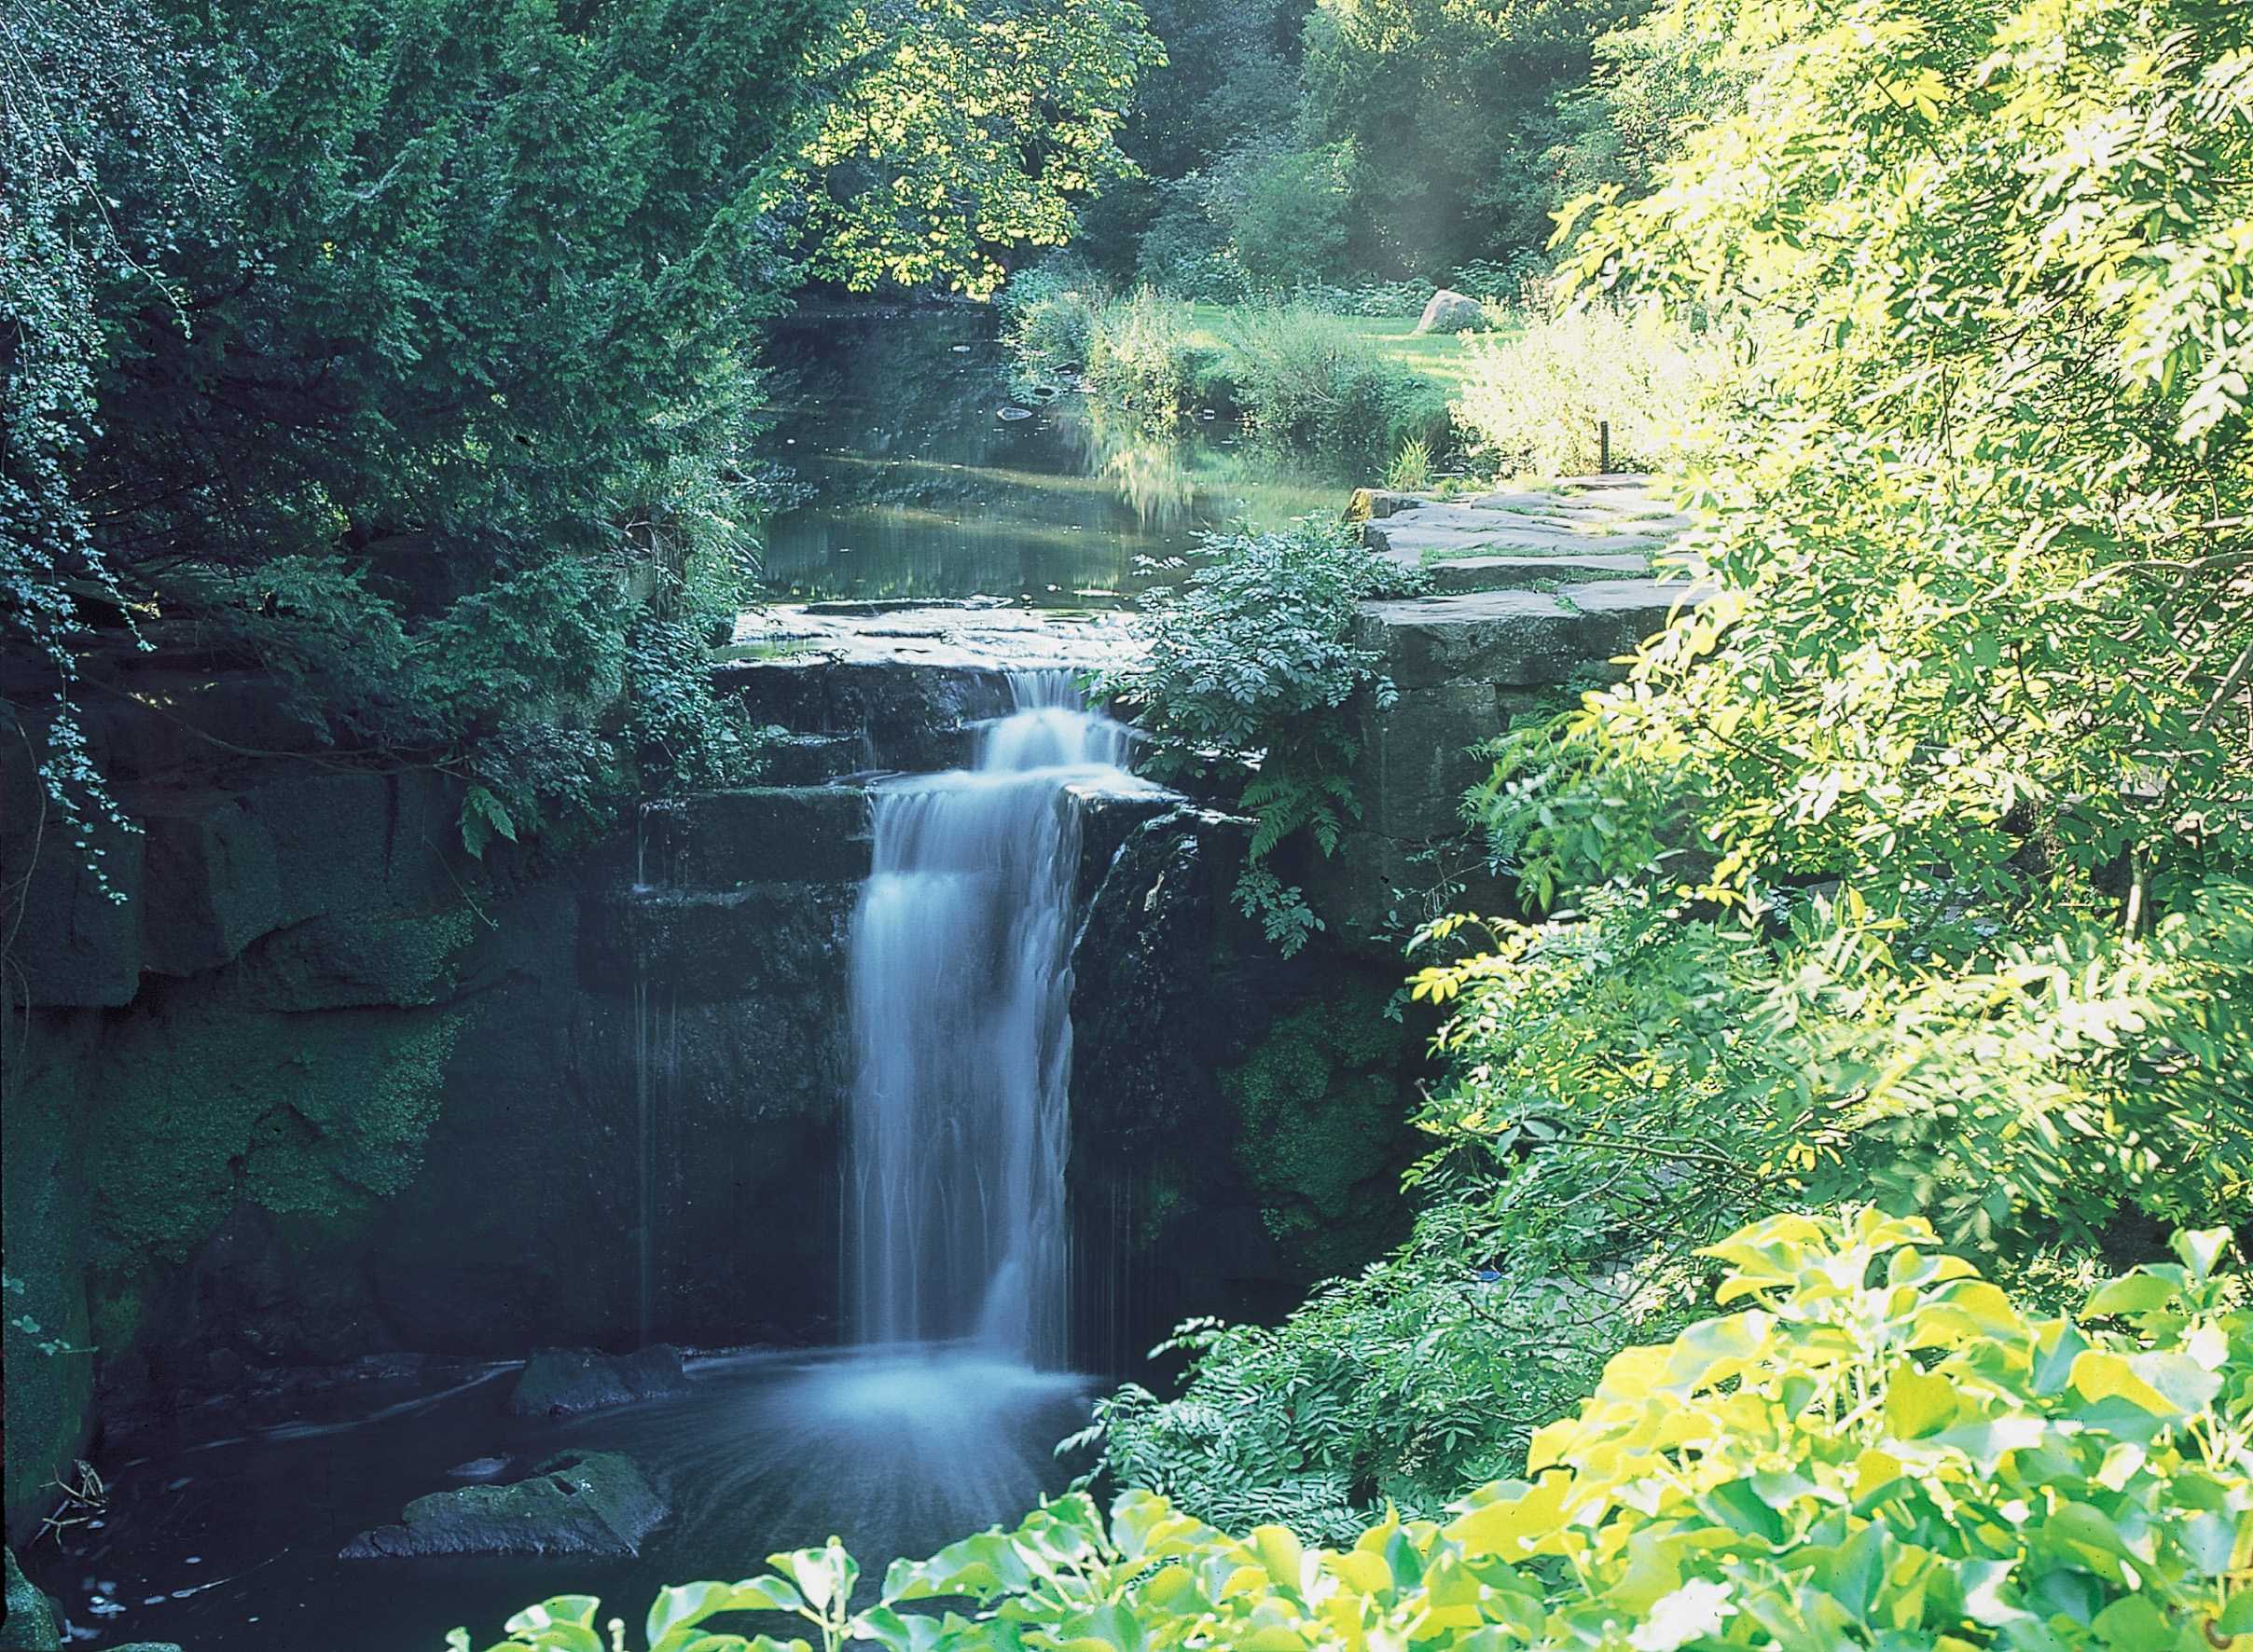 Waterfall at Jesmond Dene park